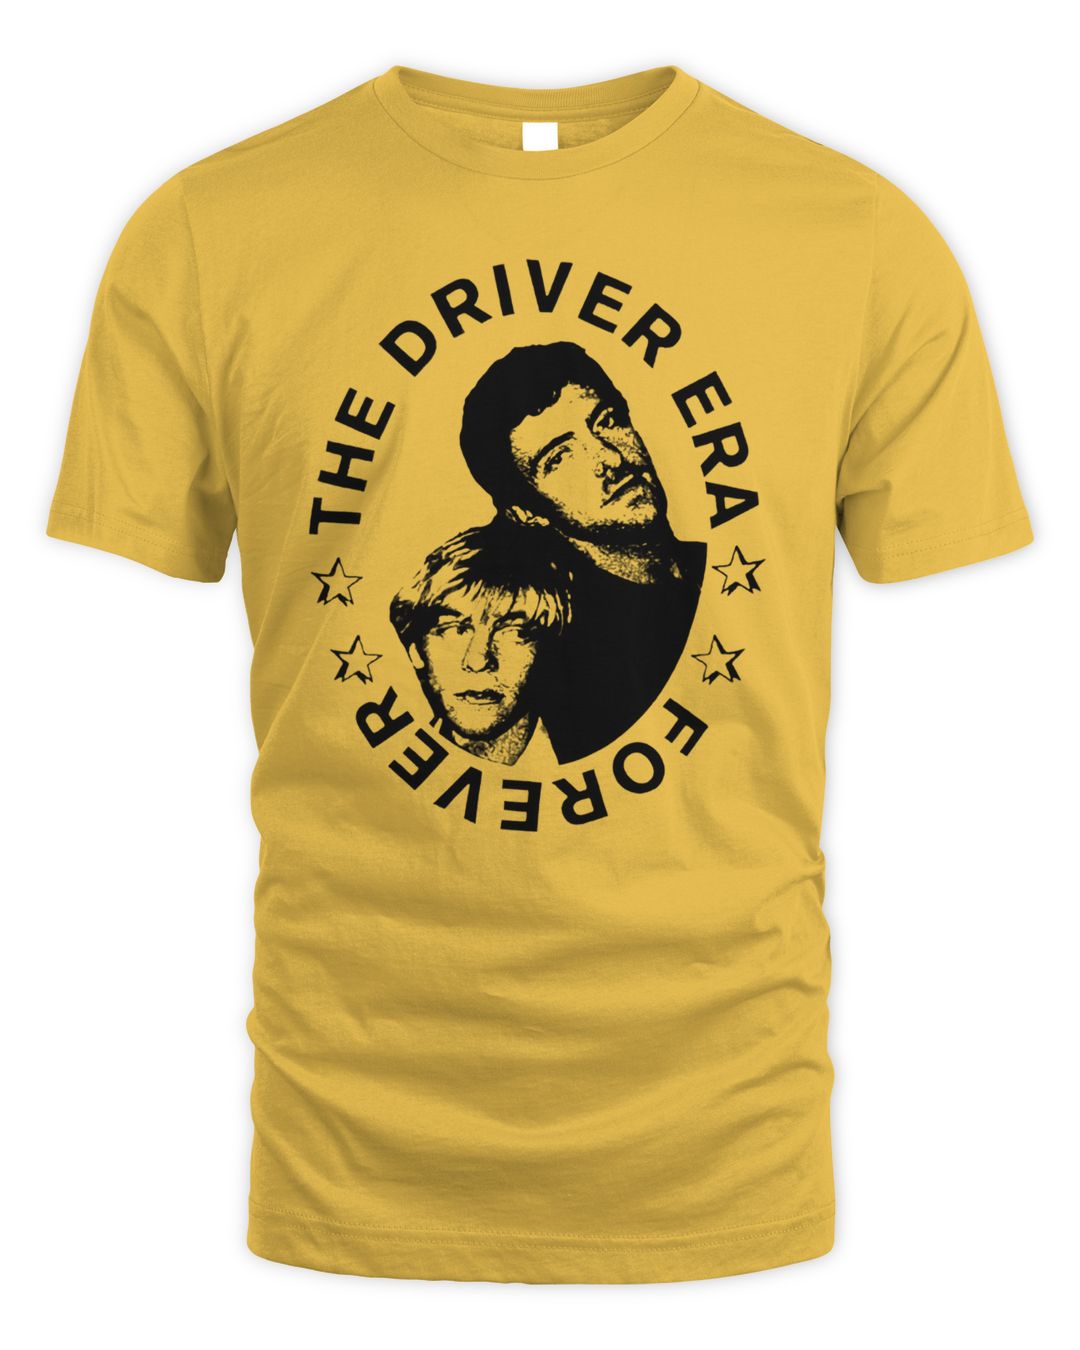 The Driver Era Merch Forever Shirt